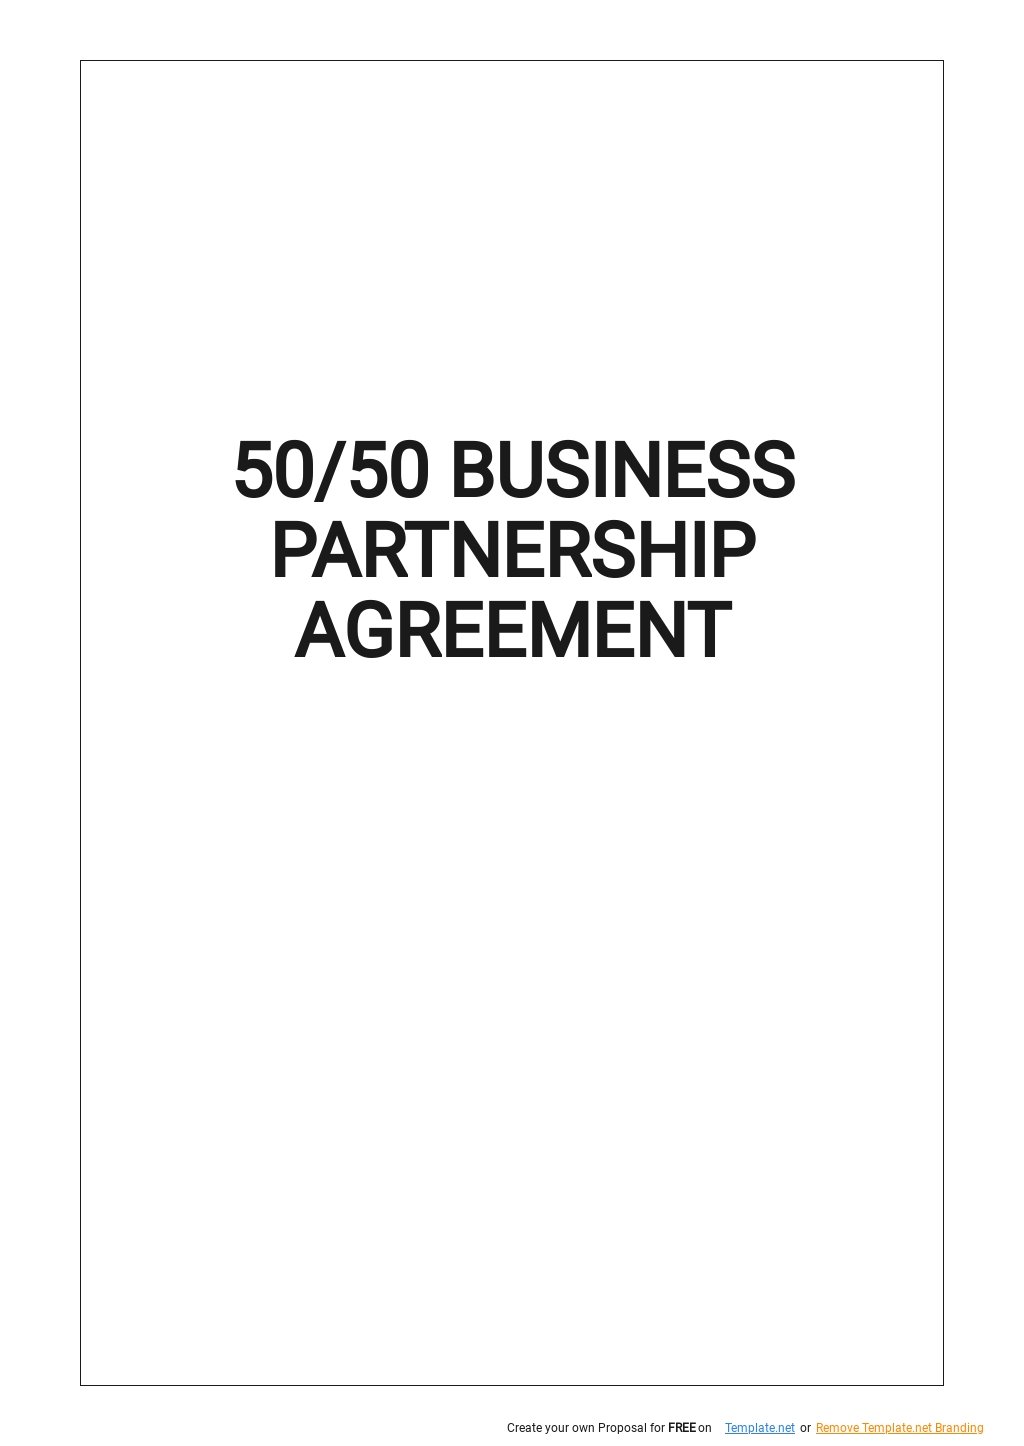 50/50 Partnership Agreement Template Word